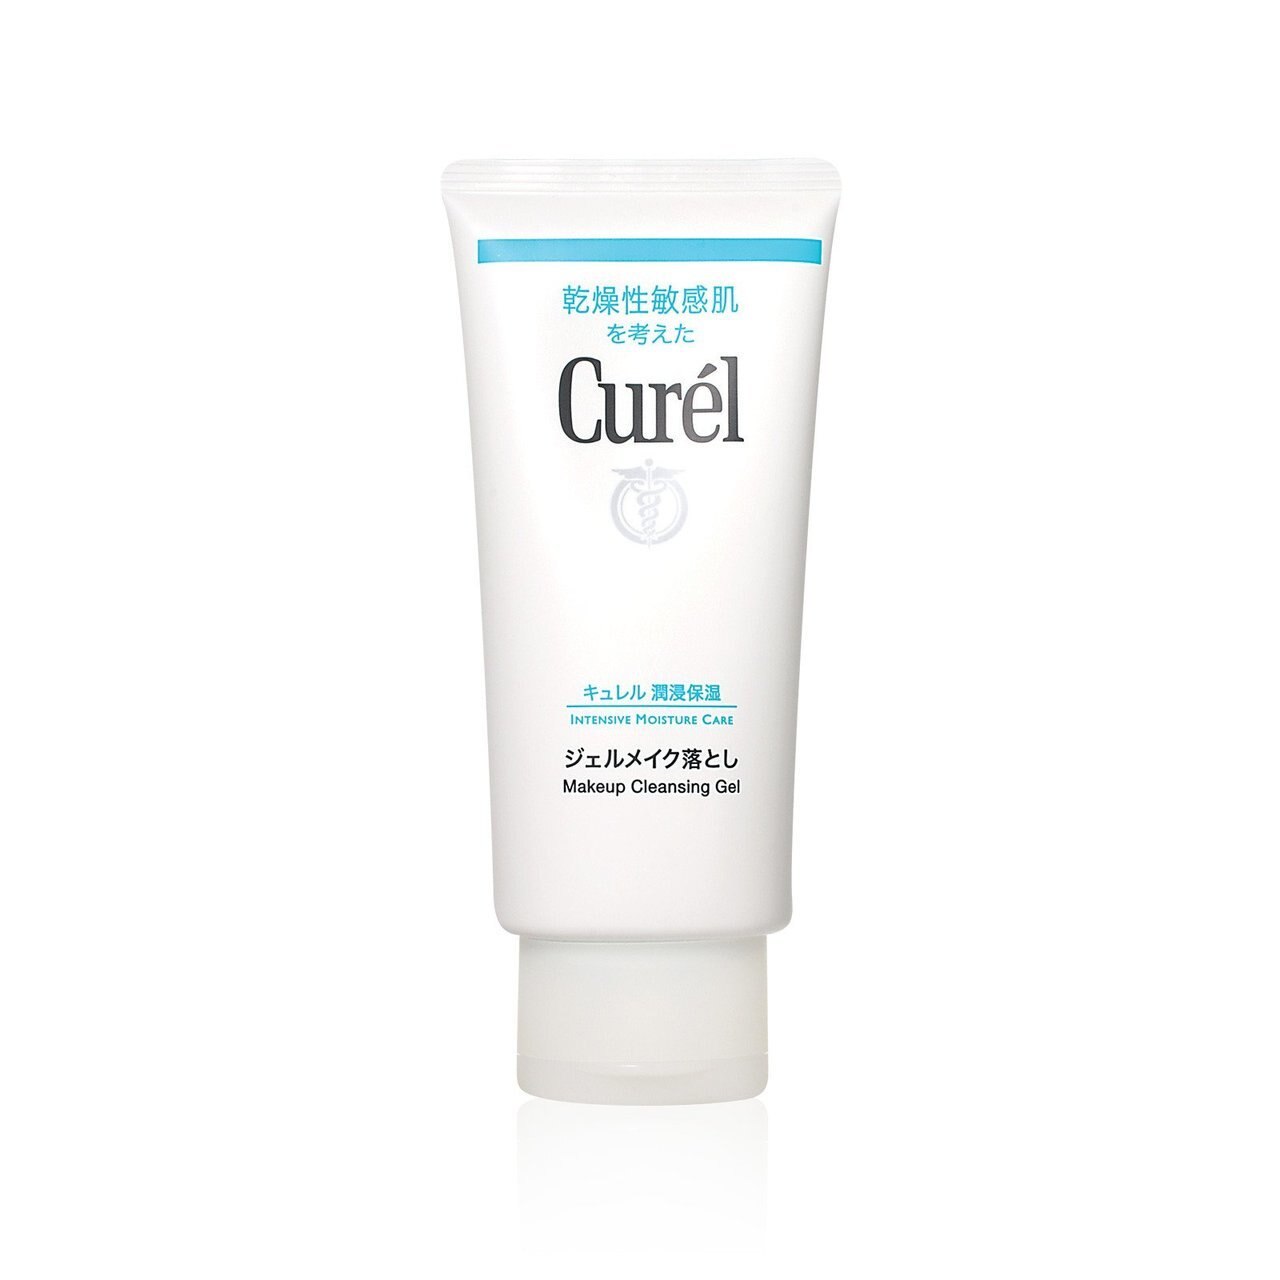 Curel Makeup cleansing gel